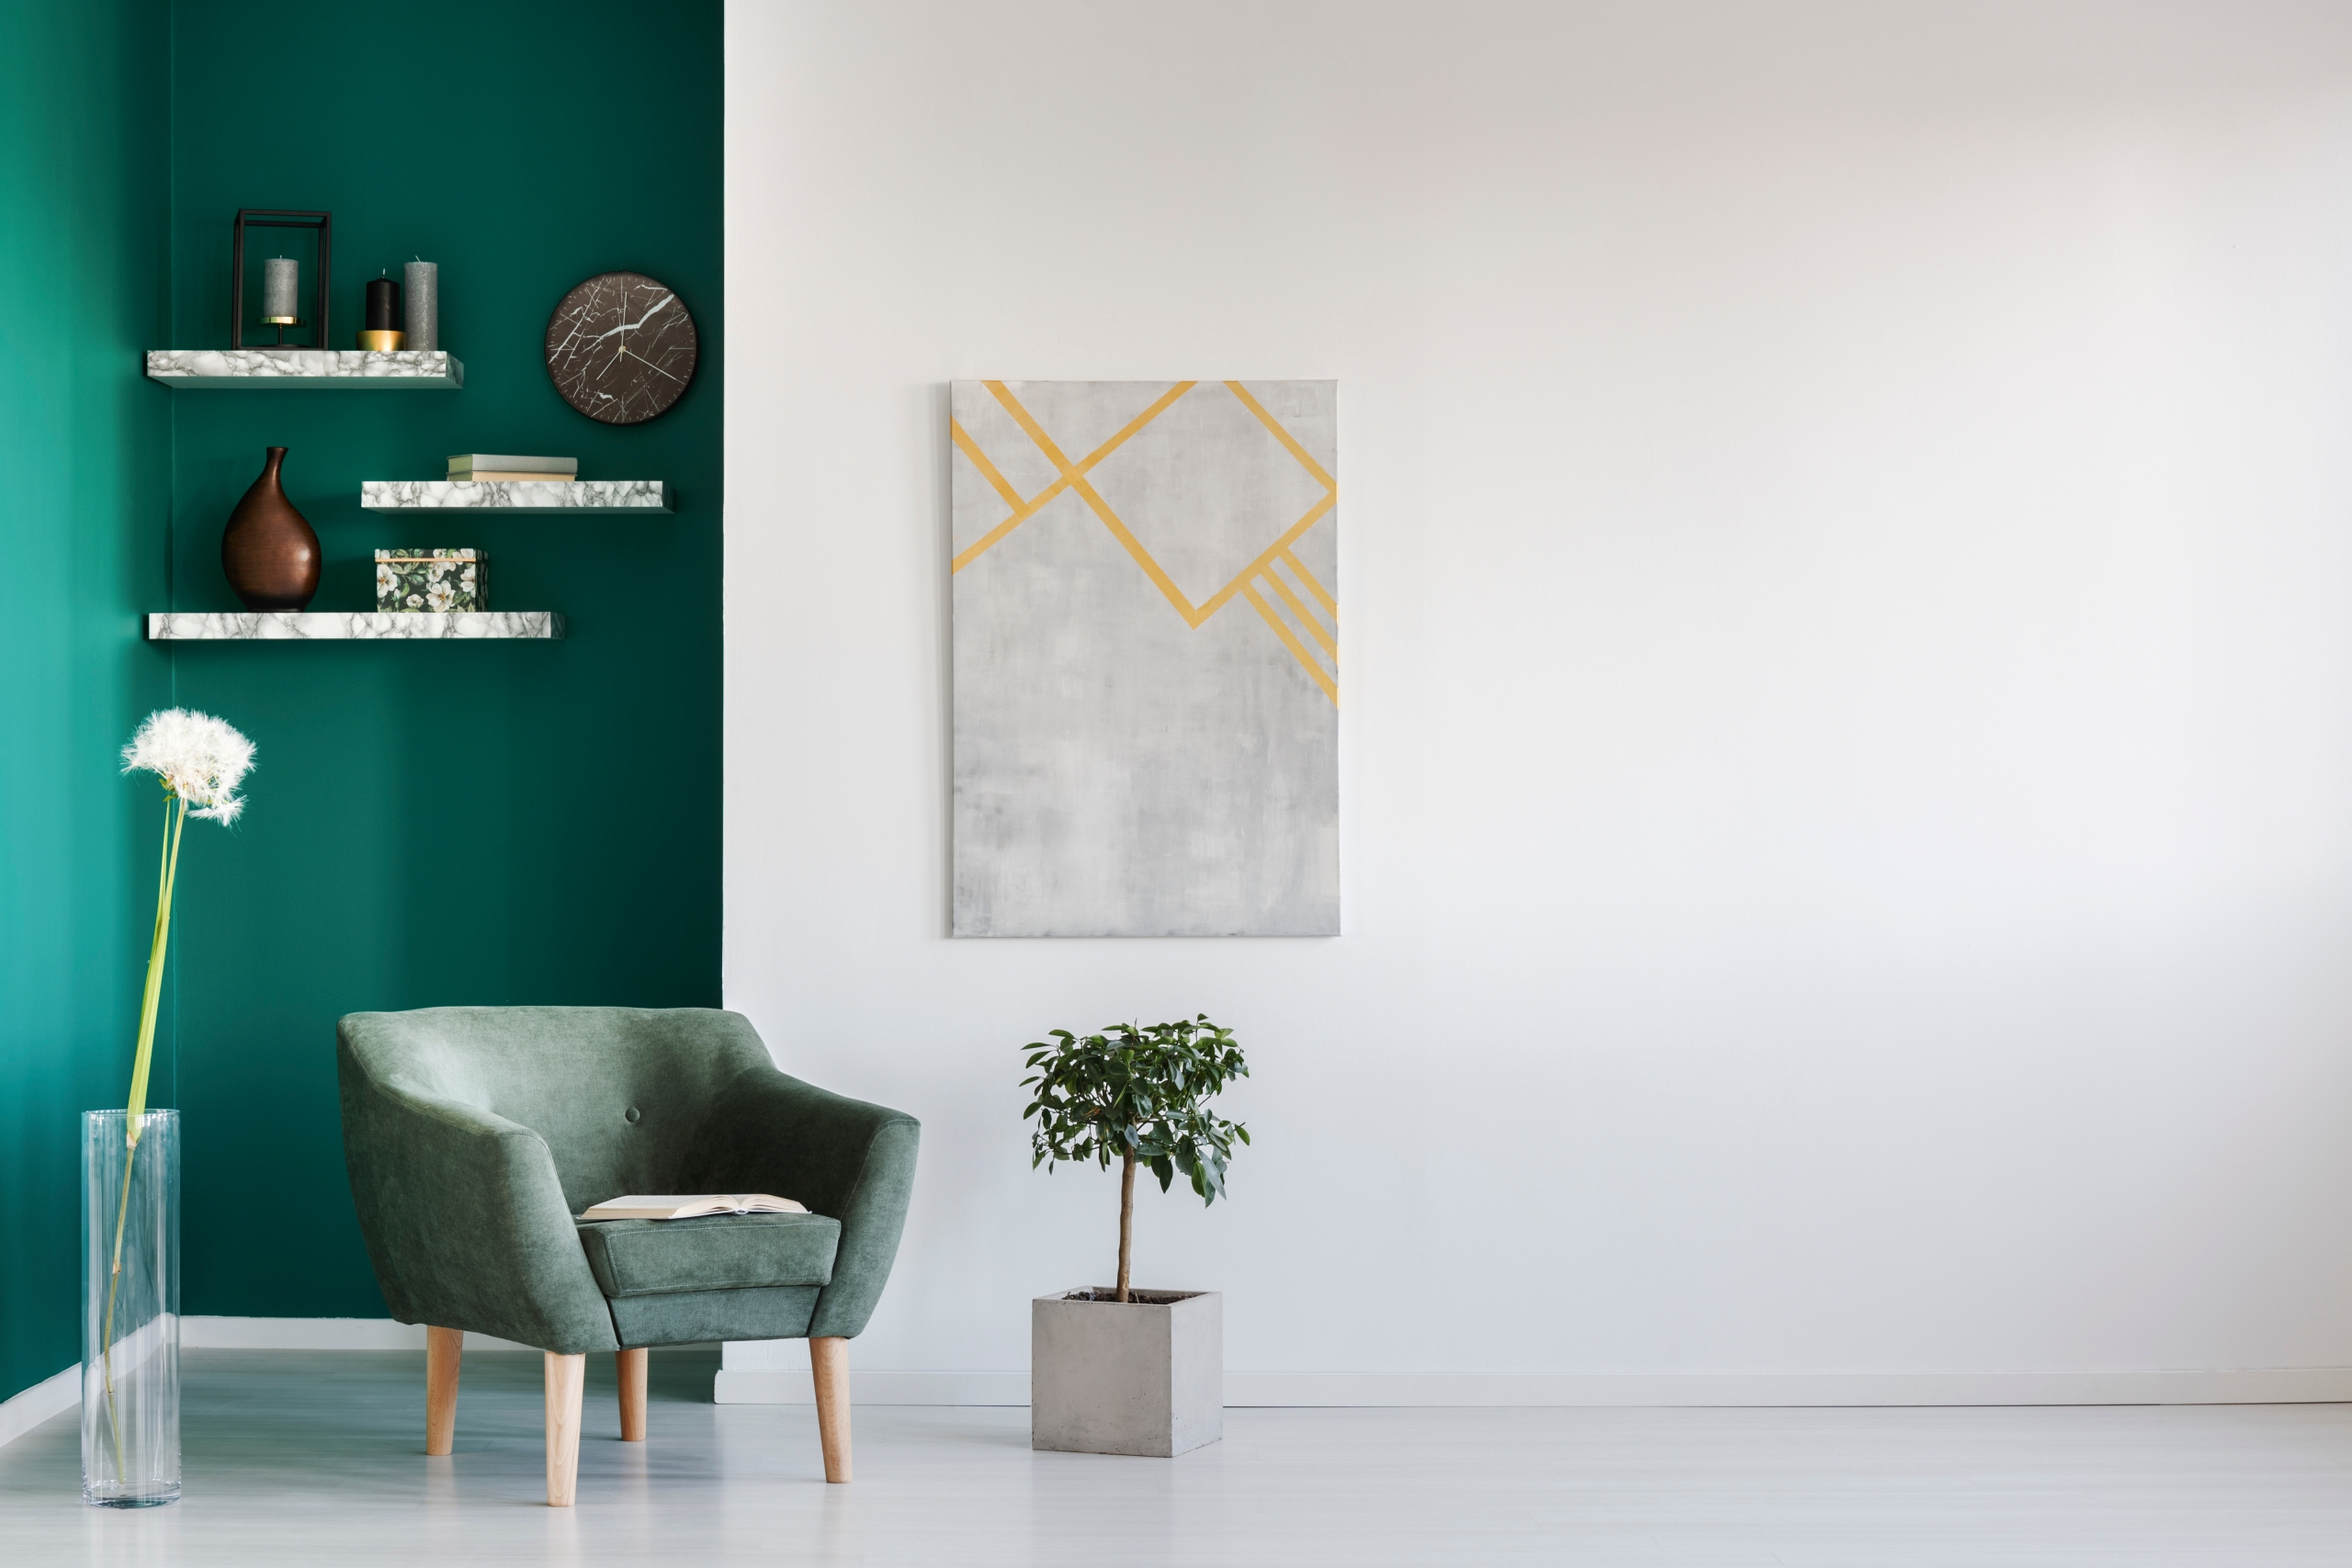 Green,Armchair,Between,Dandelion,And,Plant,In,Living,Room,Interior